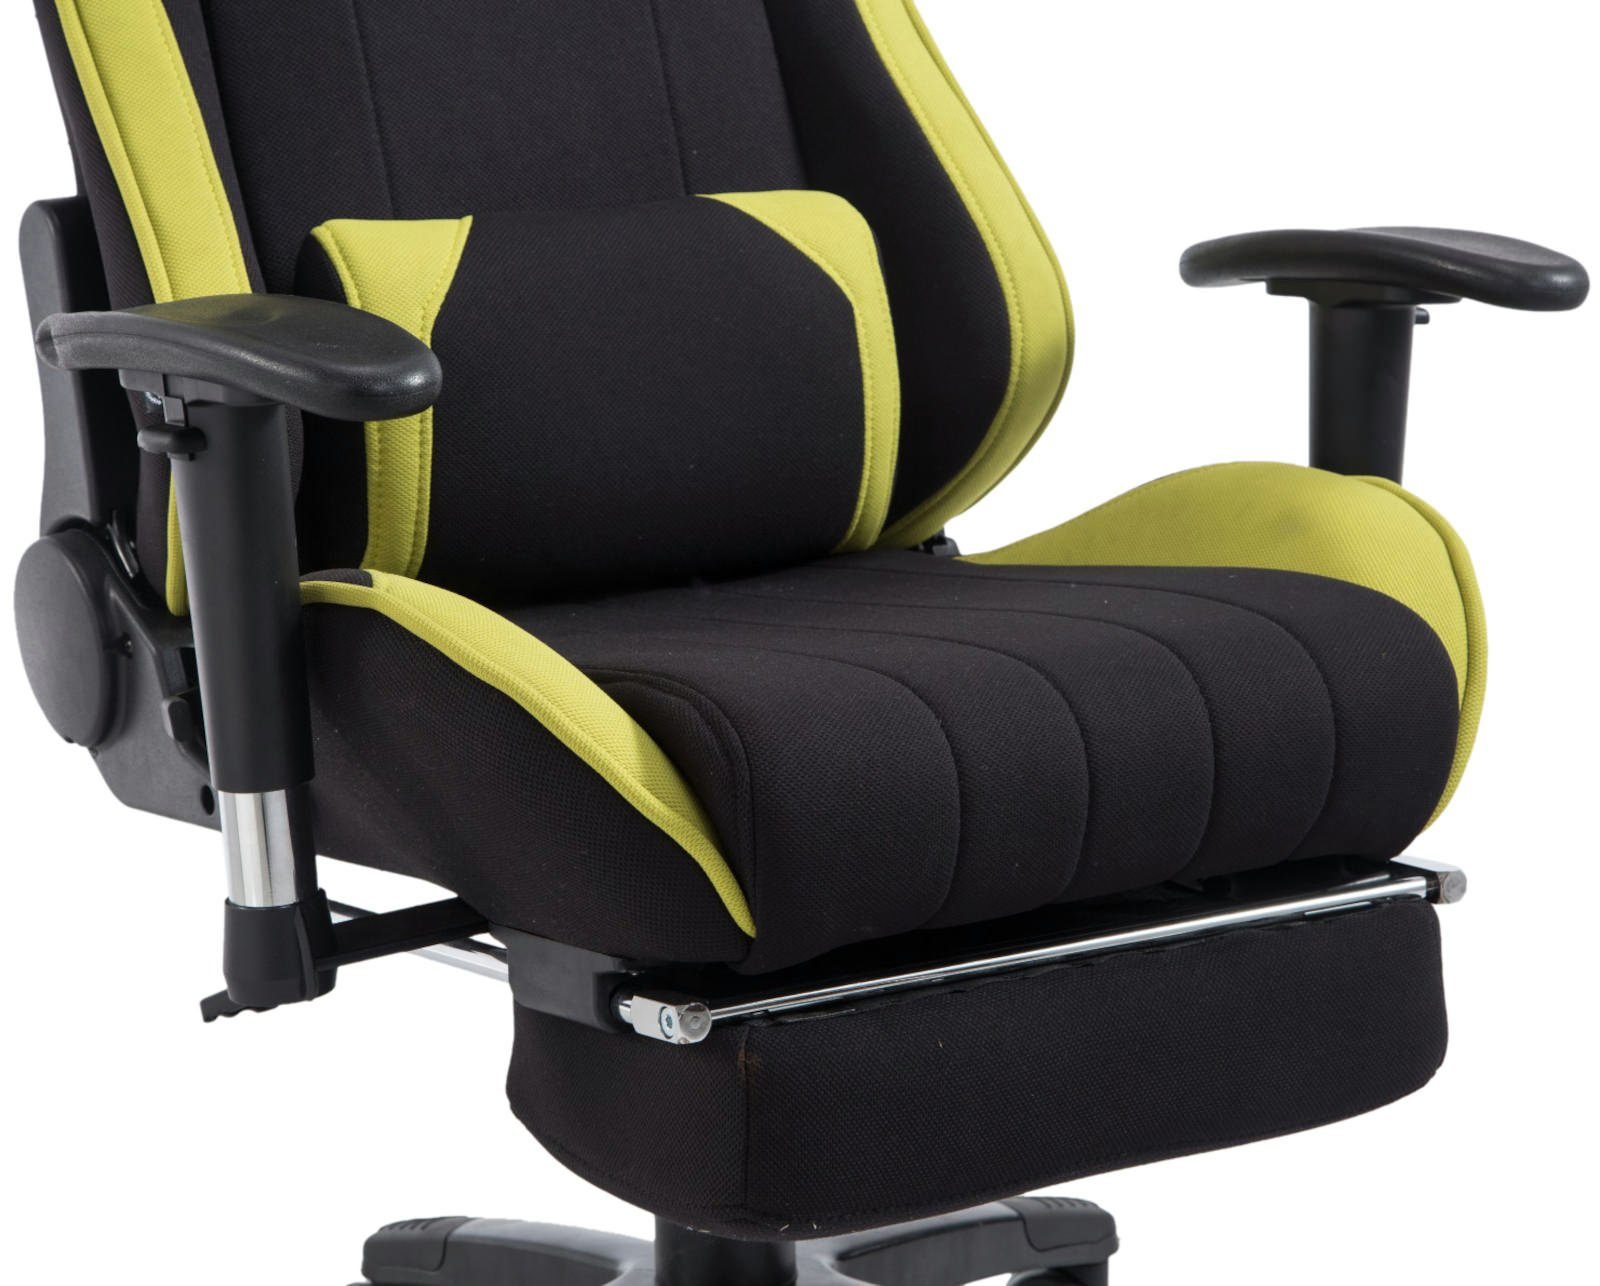 Gaming Chair Shift schwarz/grün Gamingstuhl, Stoff, V2 CLP höhenverstell-&drehbar